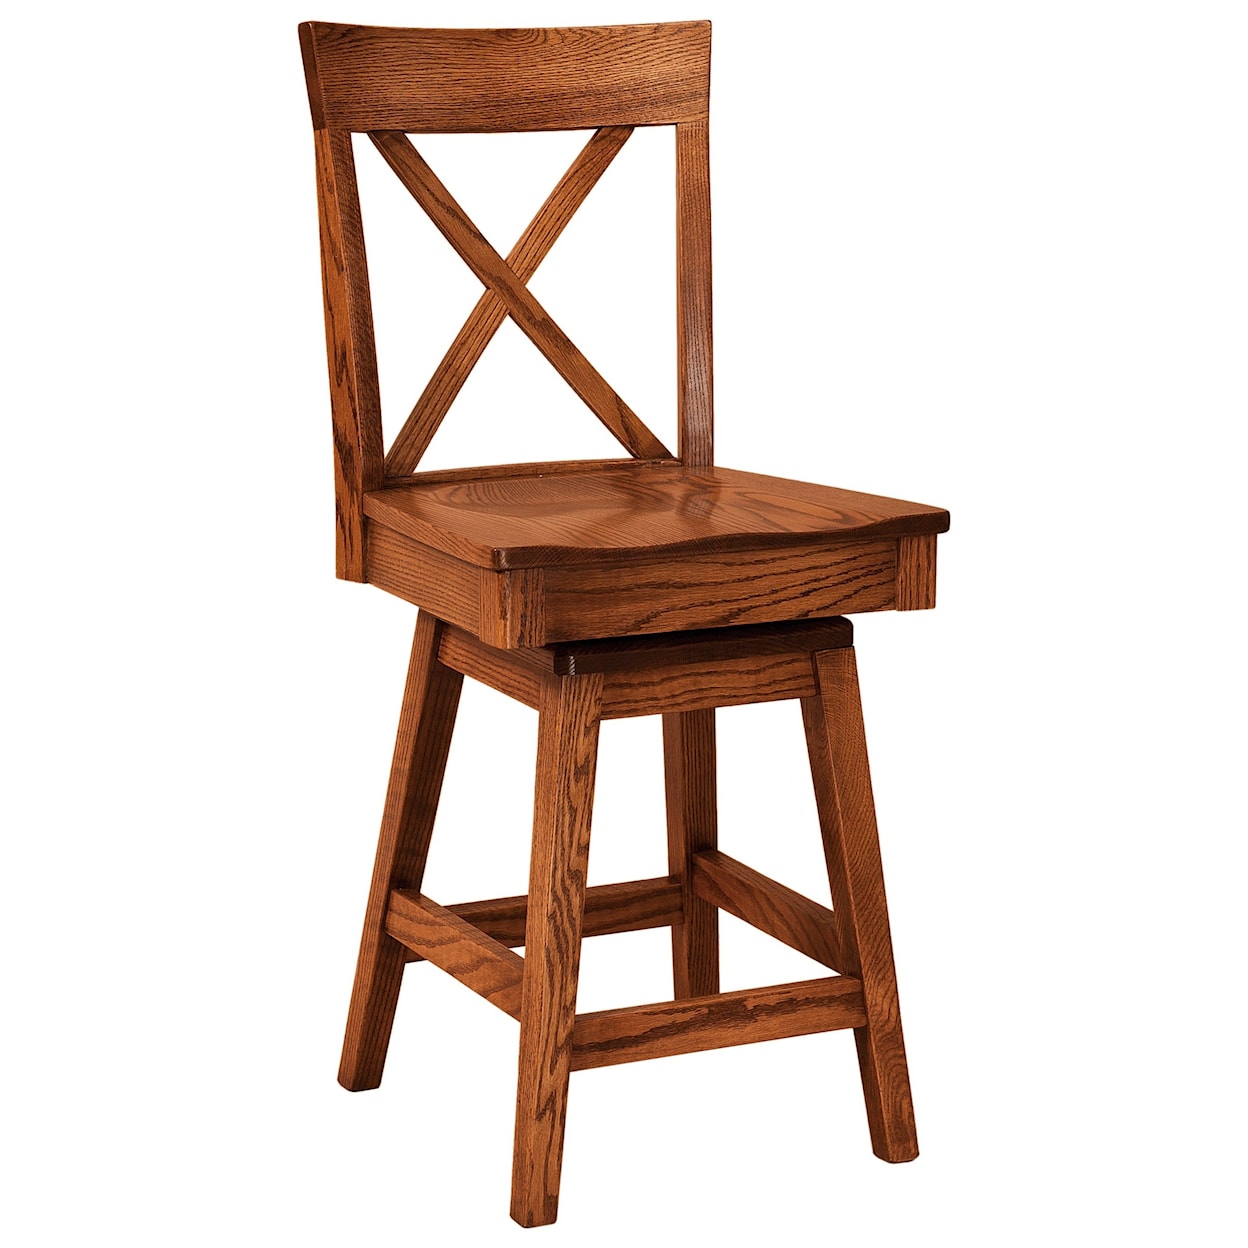 F&N Woodworking Frontier Swivel Bar Stool - Wood Seat